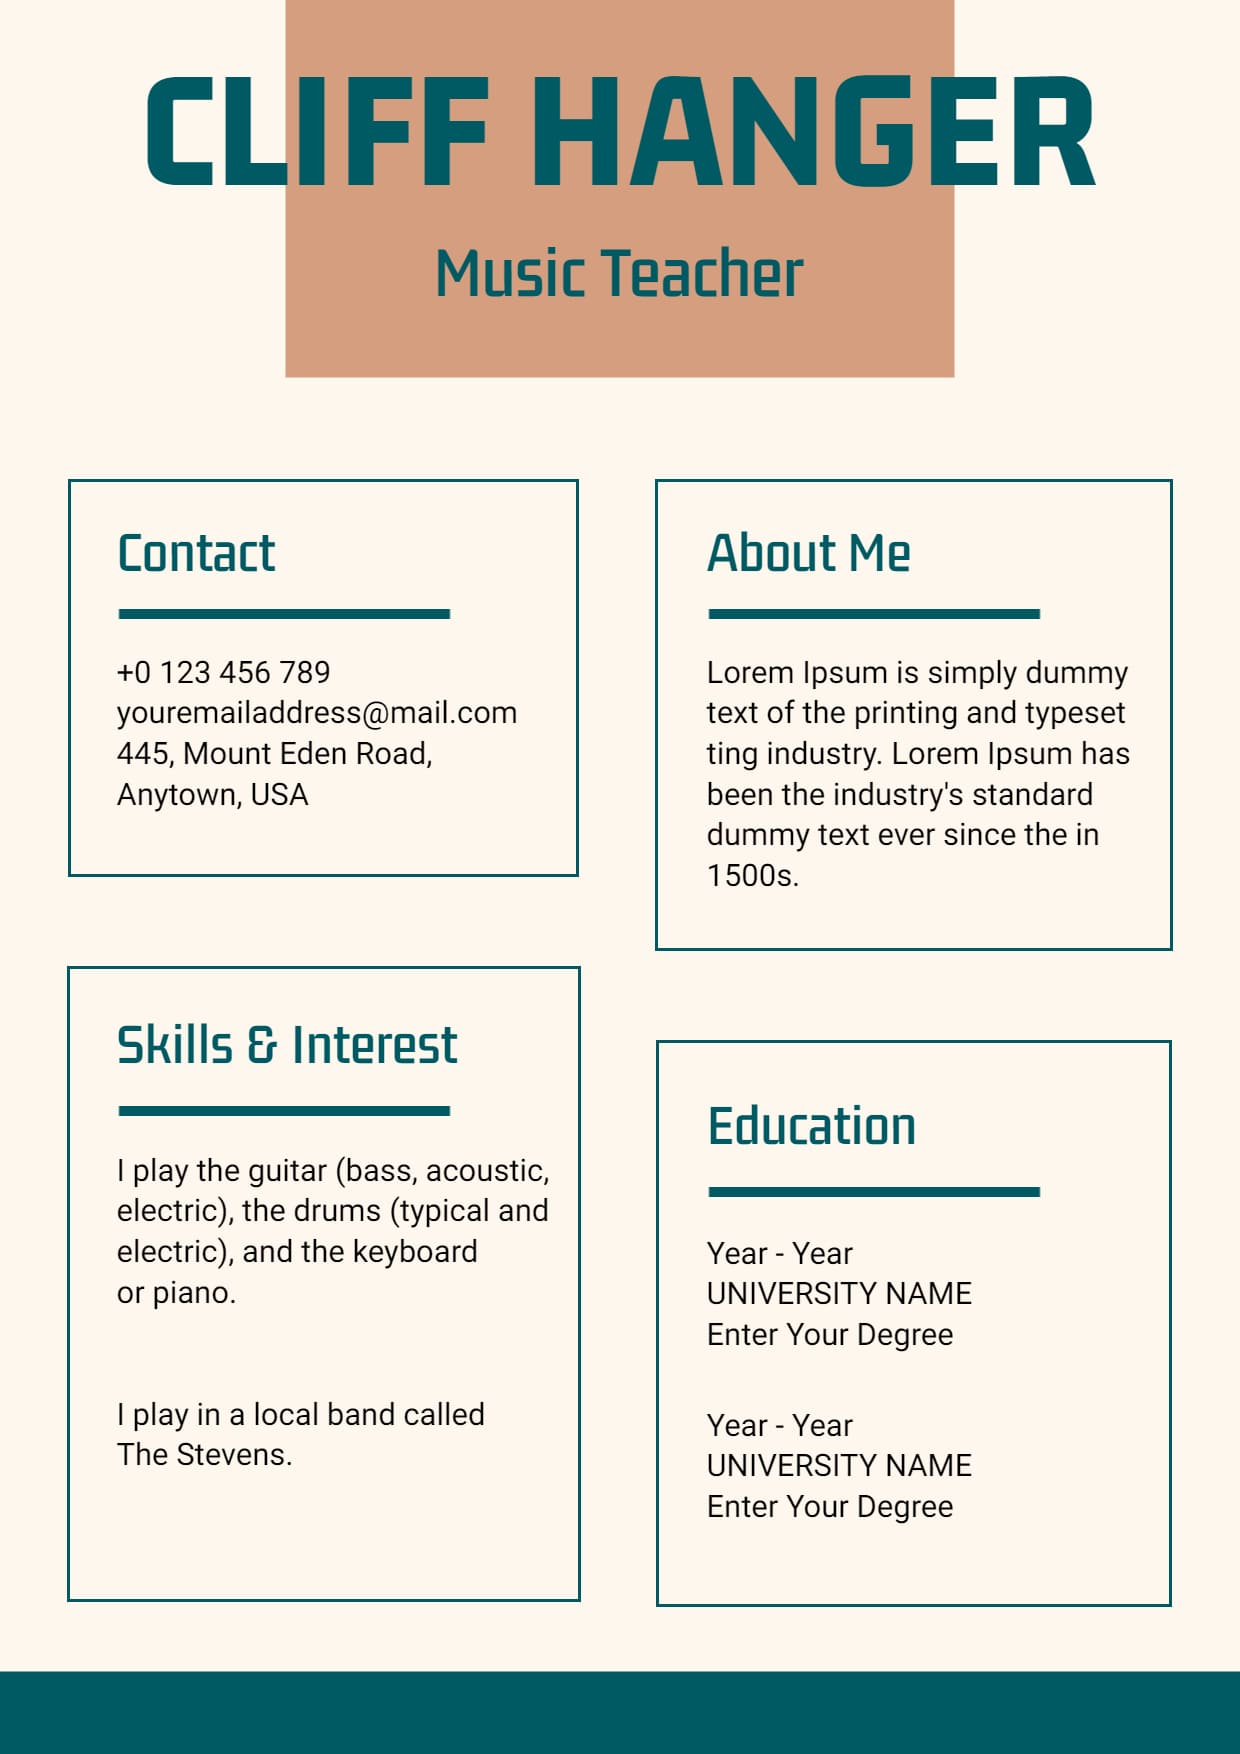 Music Teacher Resume template examples